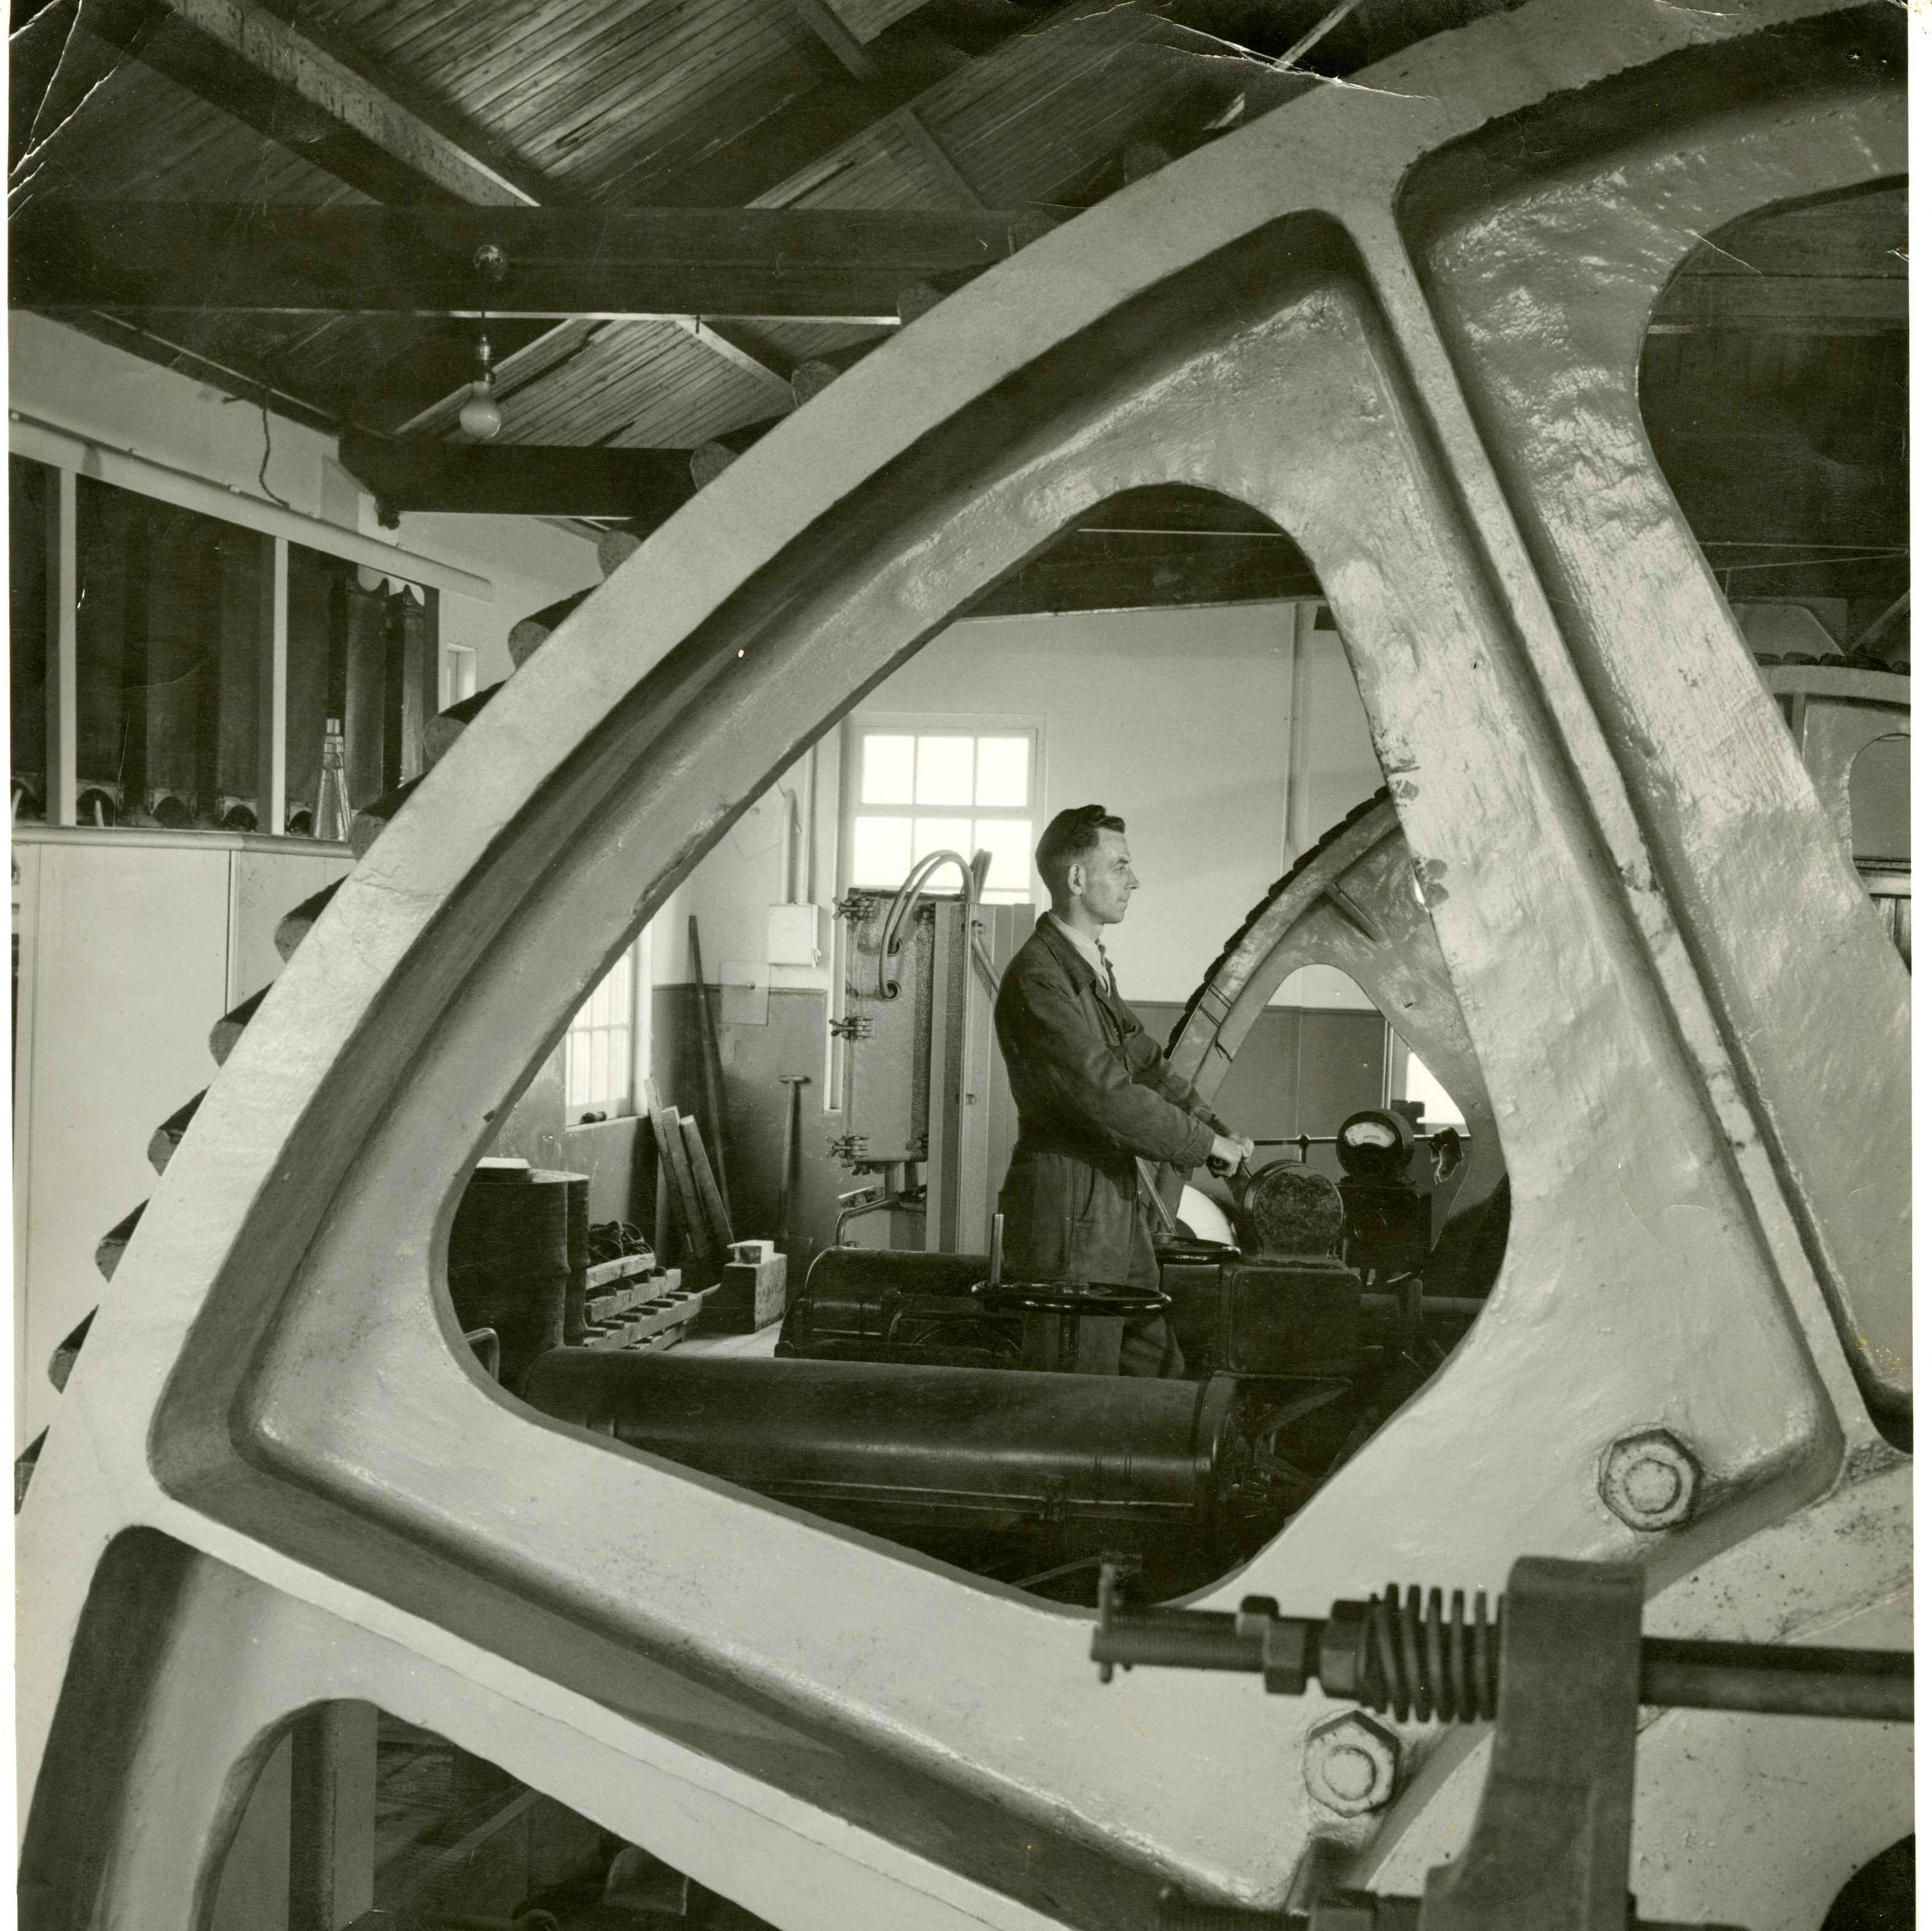 Photograph of interior of winchhouse at Ayrshire Dockyard Irvine